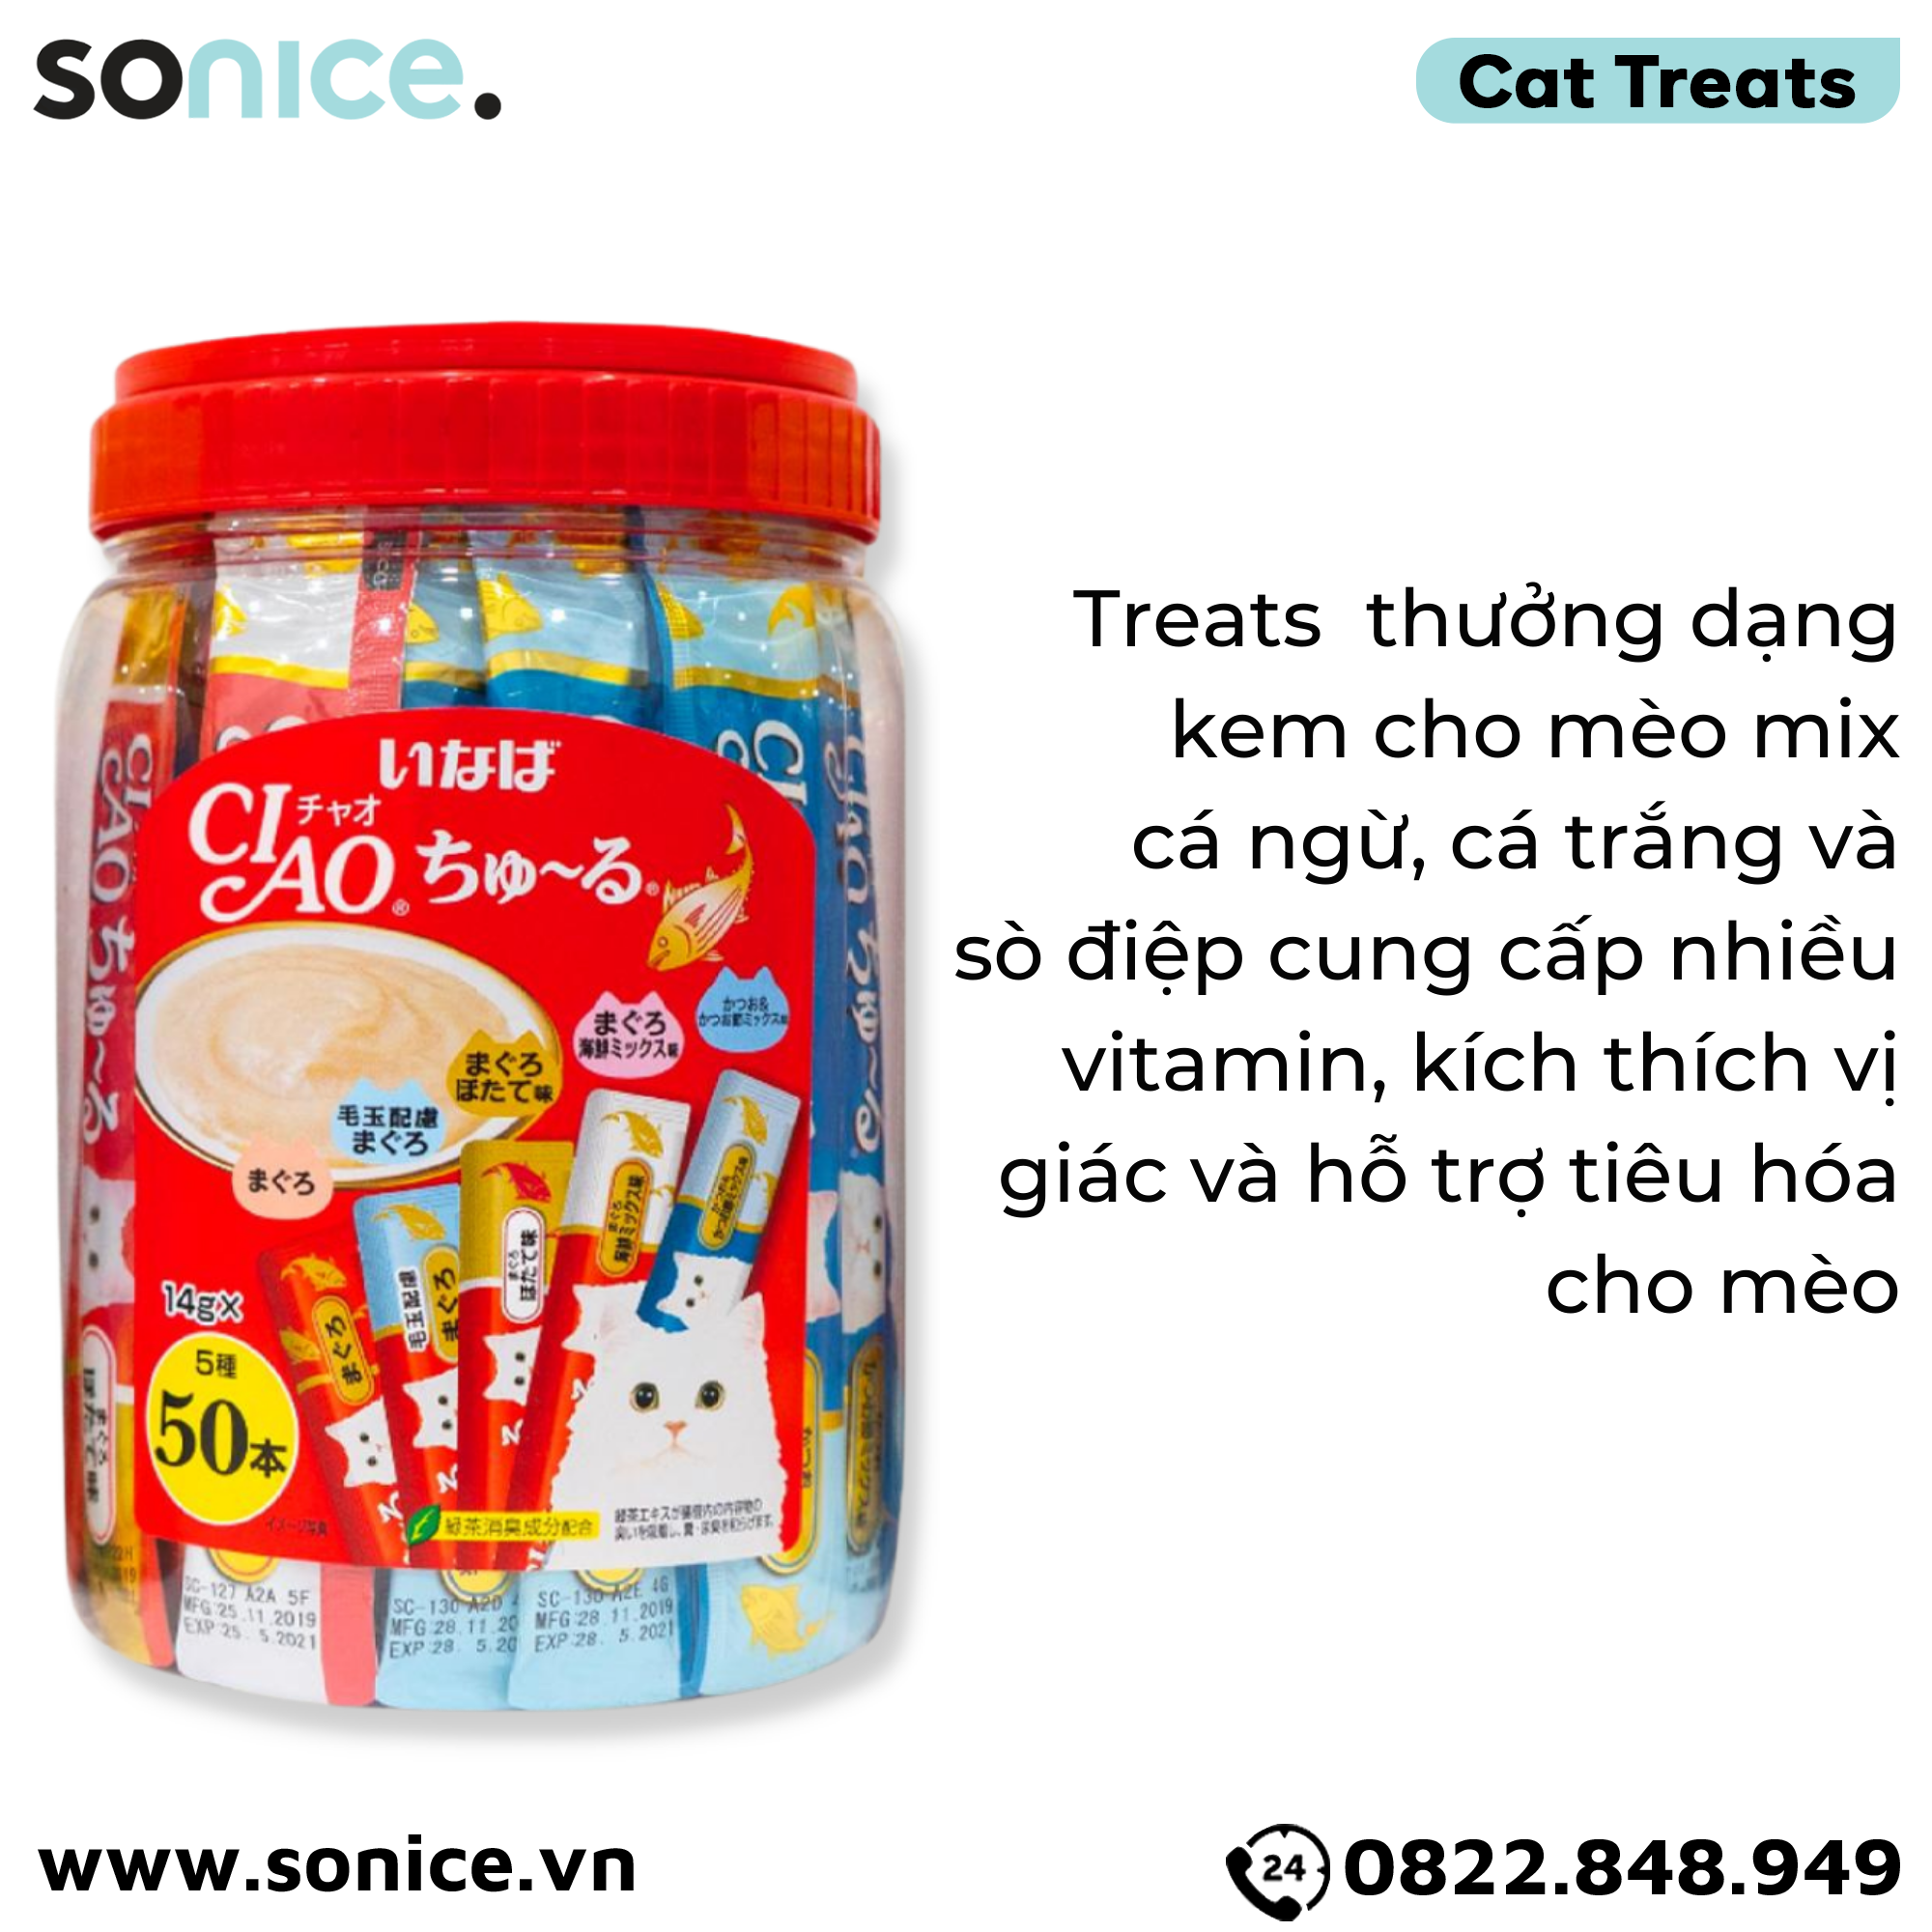  Treats Ciao Churu Tuna with Vitamin and Green Tea 700g - Hộp 50 gói mix SONICE. 